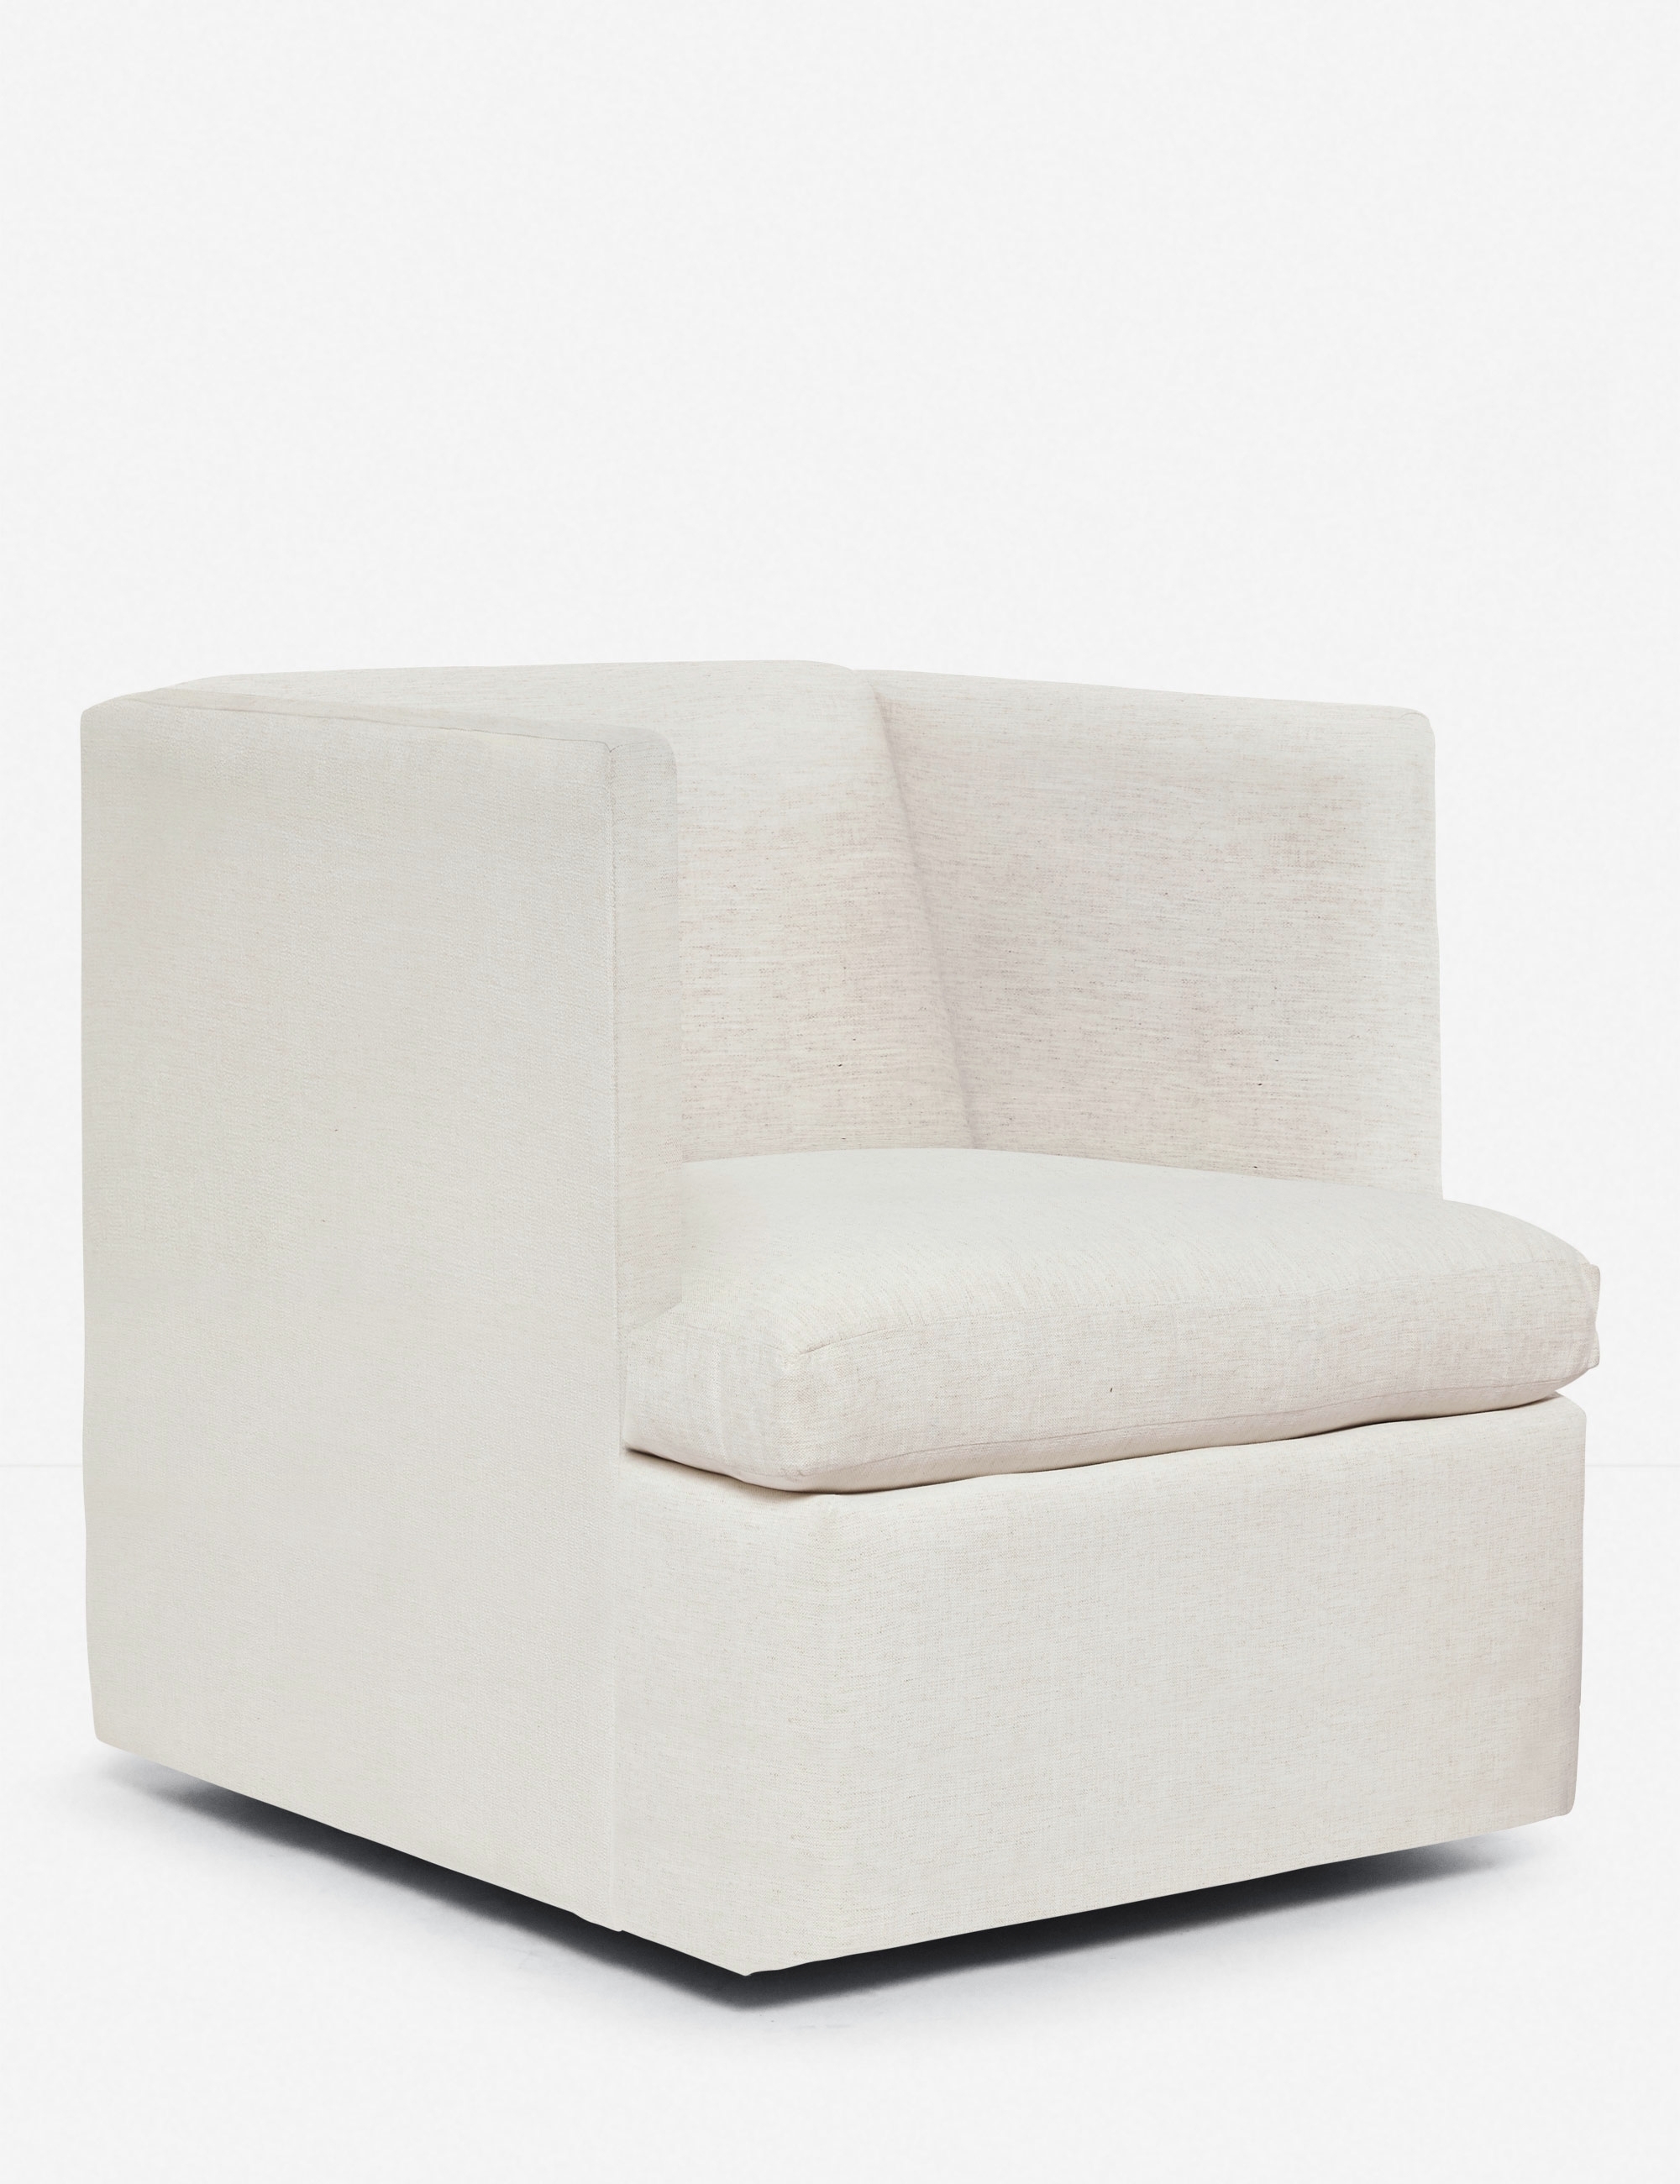 Hayden Square Swivel Chair, Sand - Image 0